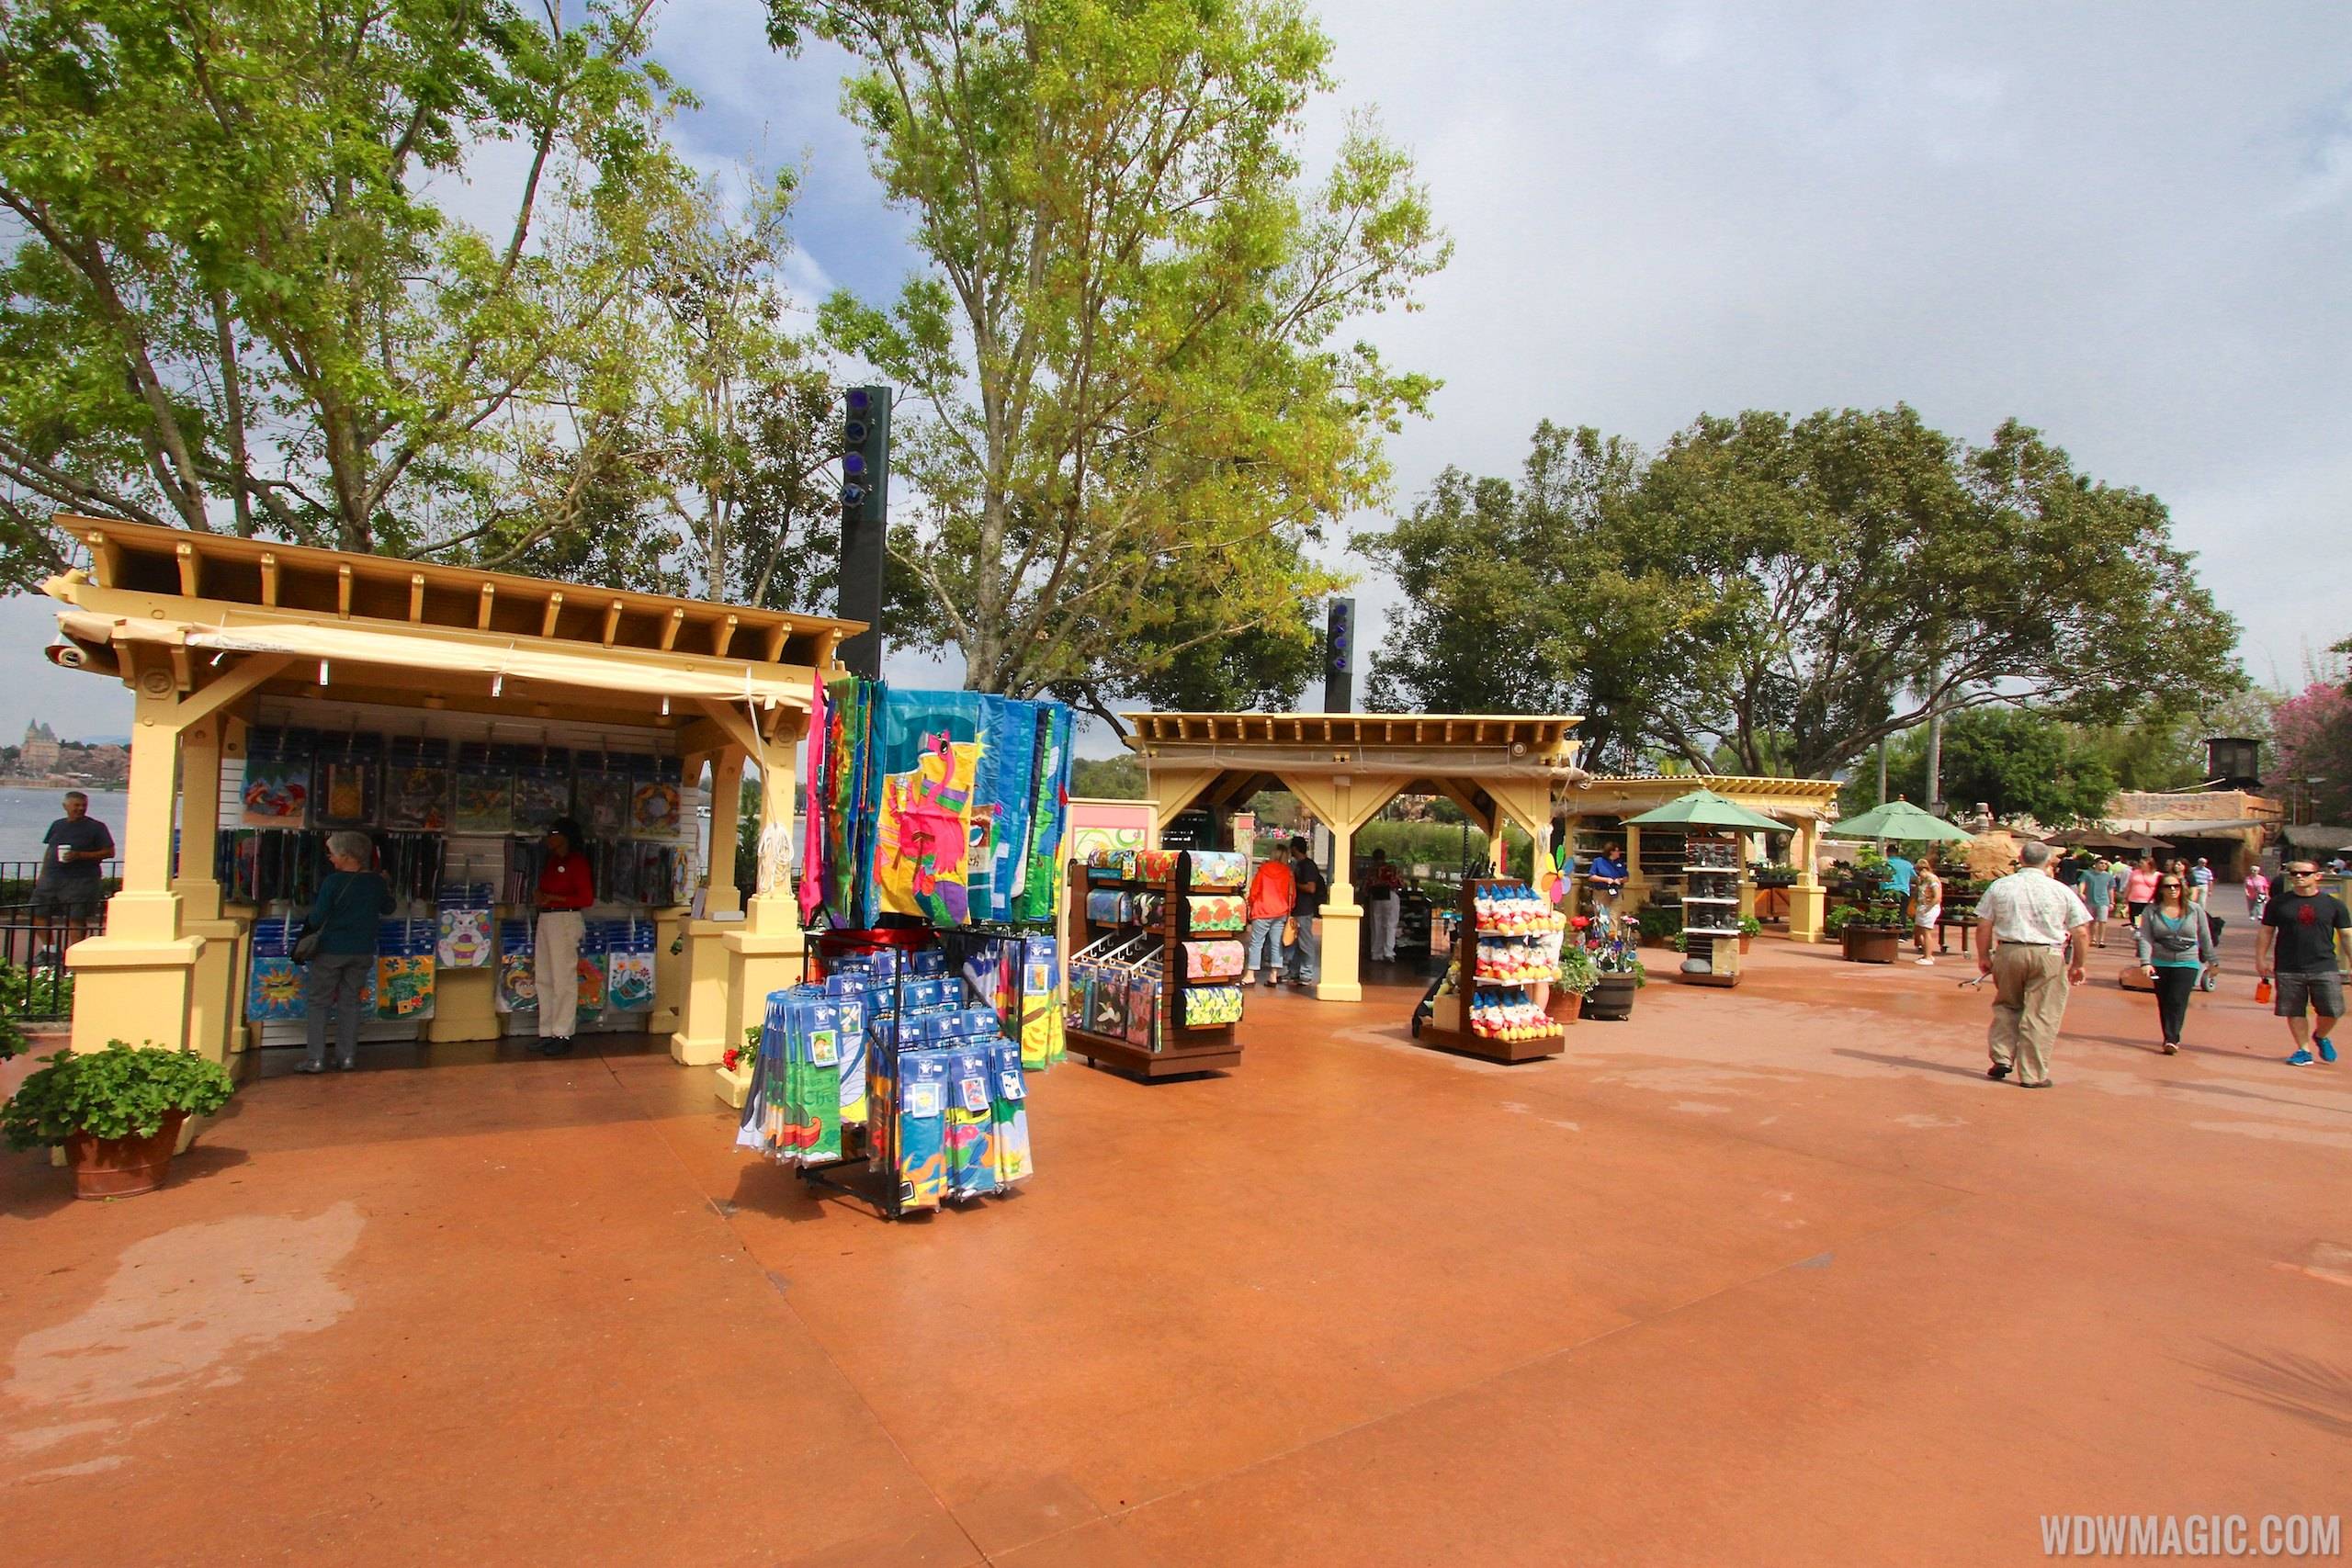 2014 Epcot Flower and Garden Festival - World Showcase Plaza vendors